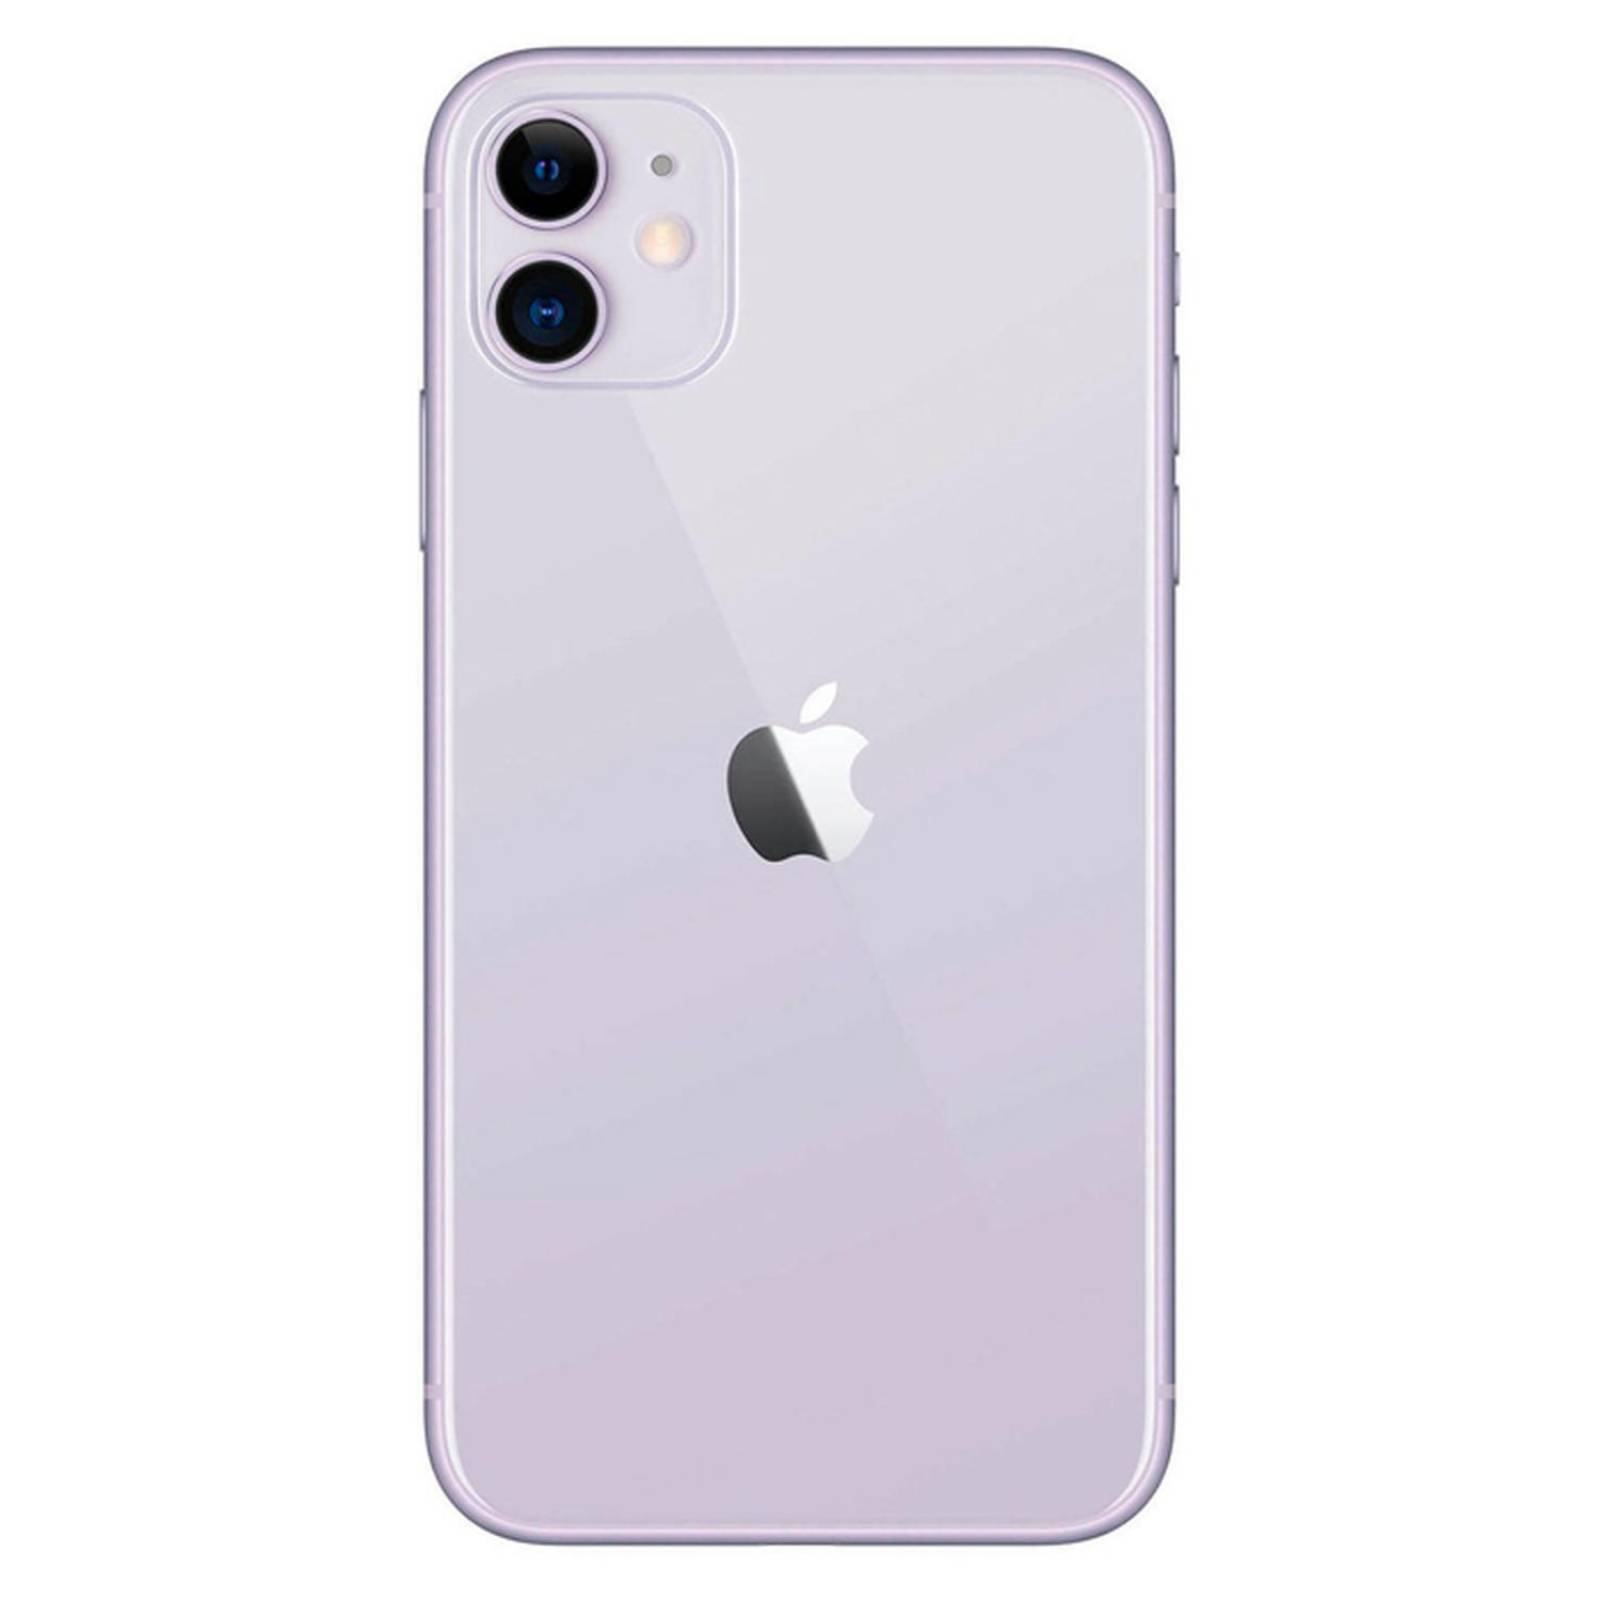 REACONDICIONADO B: APPLE iPhone 11, Blanco, 128 GB, 6.1 Liquid